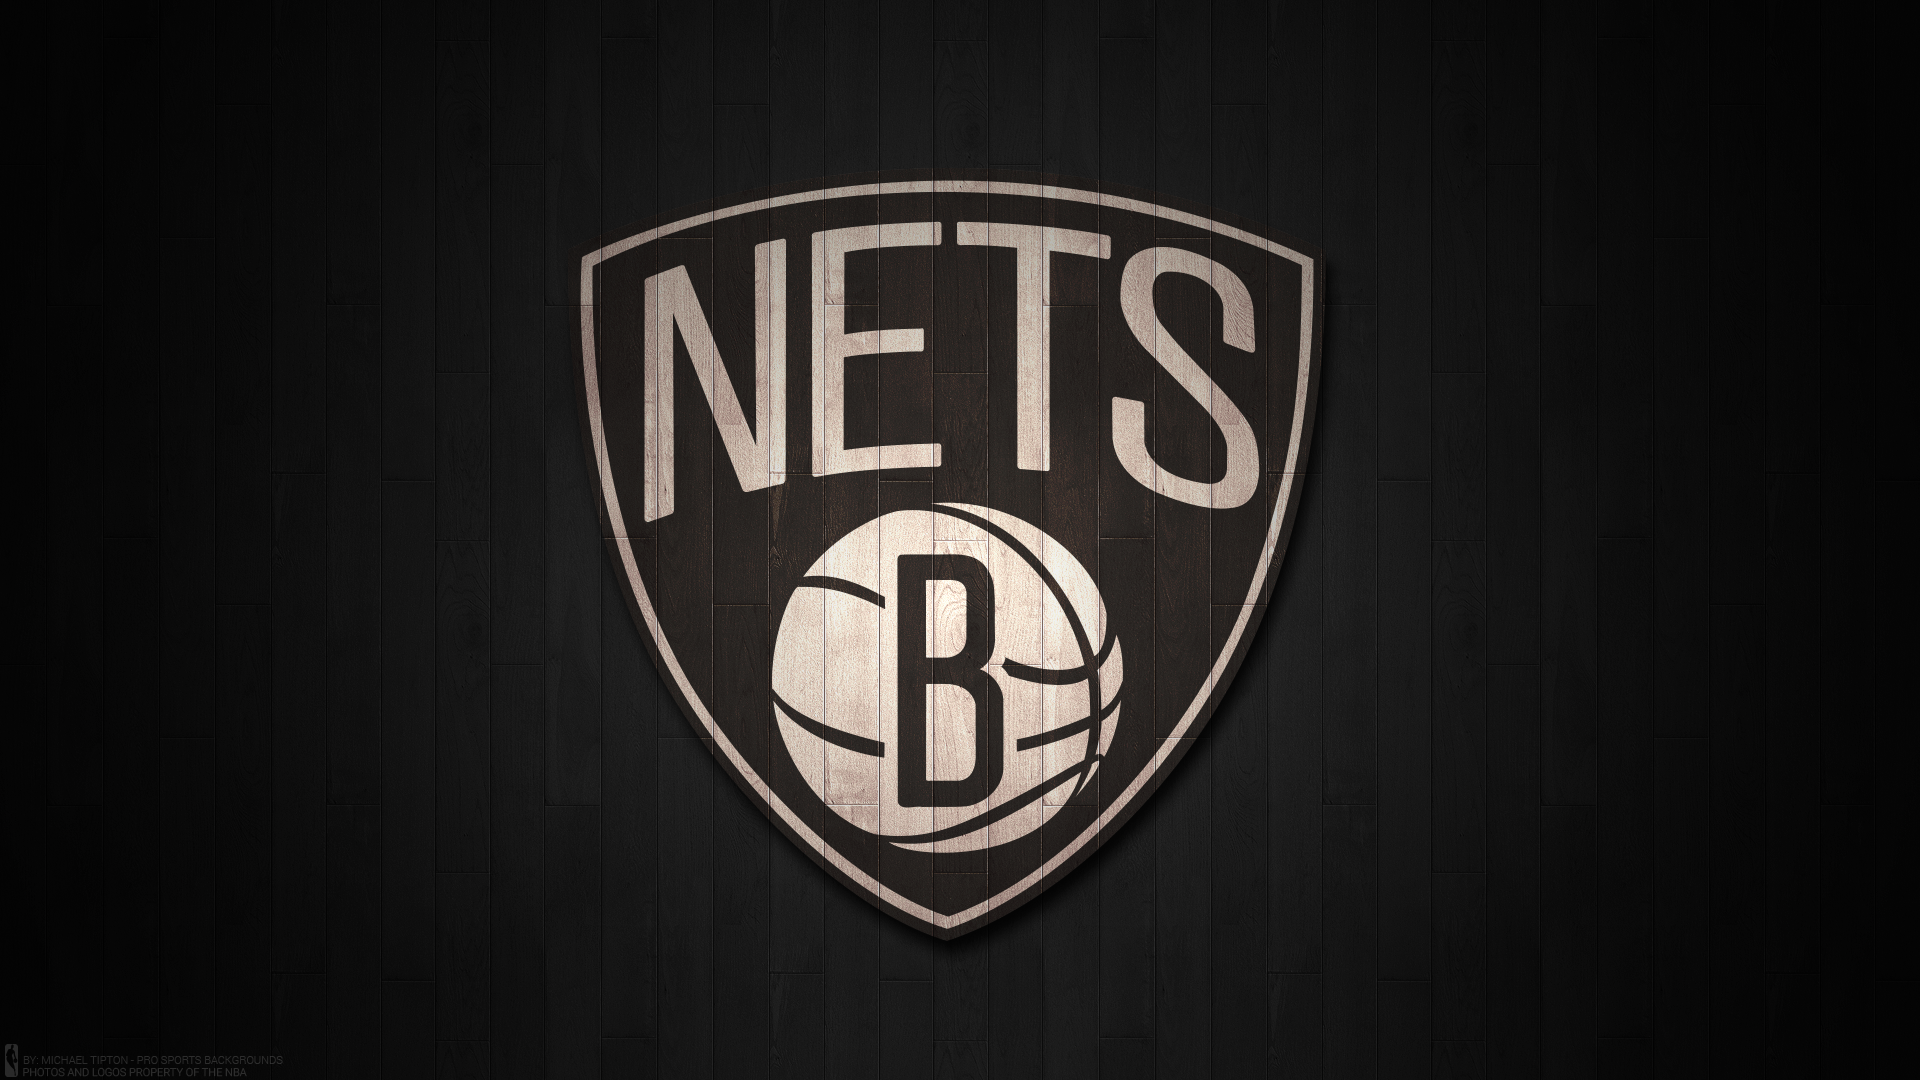 Brooklyn Nets HD Wallpaper Background Image 1920x1080 ID